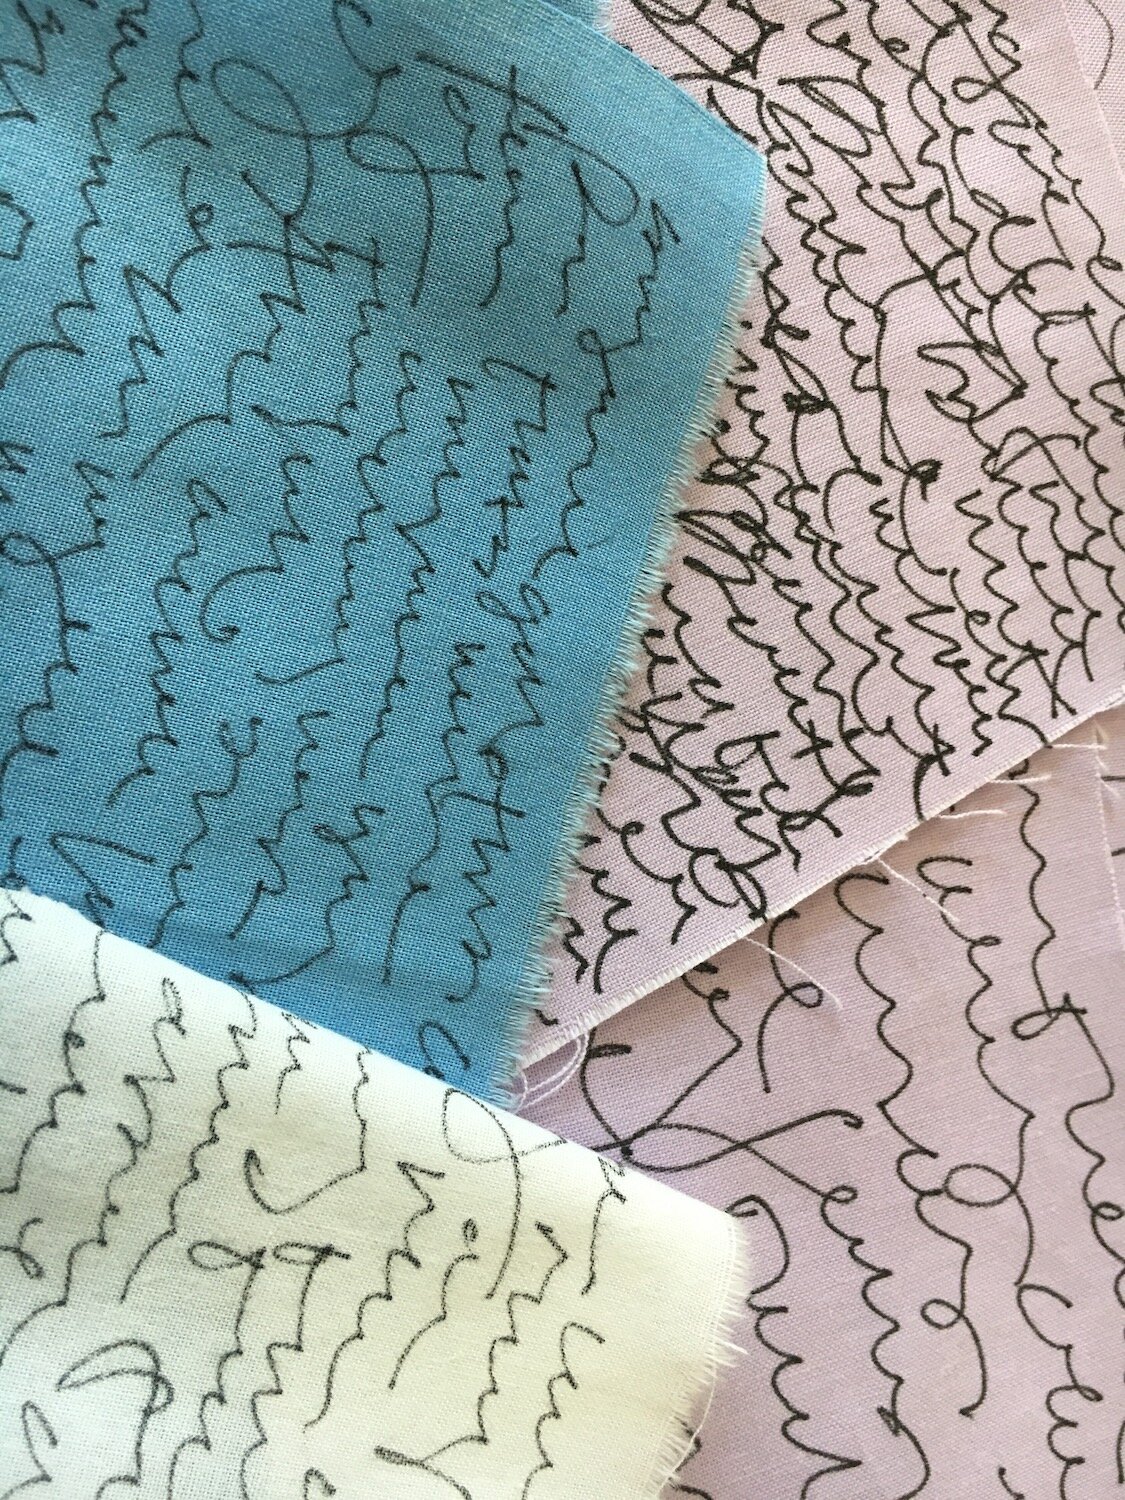 handwriting on fabric workshop deborah boschert.jpeg